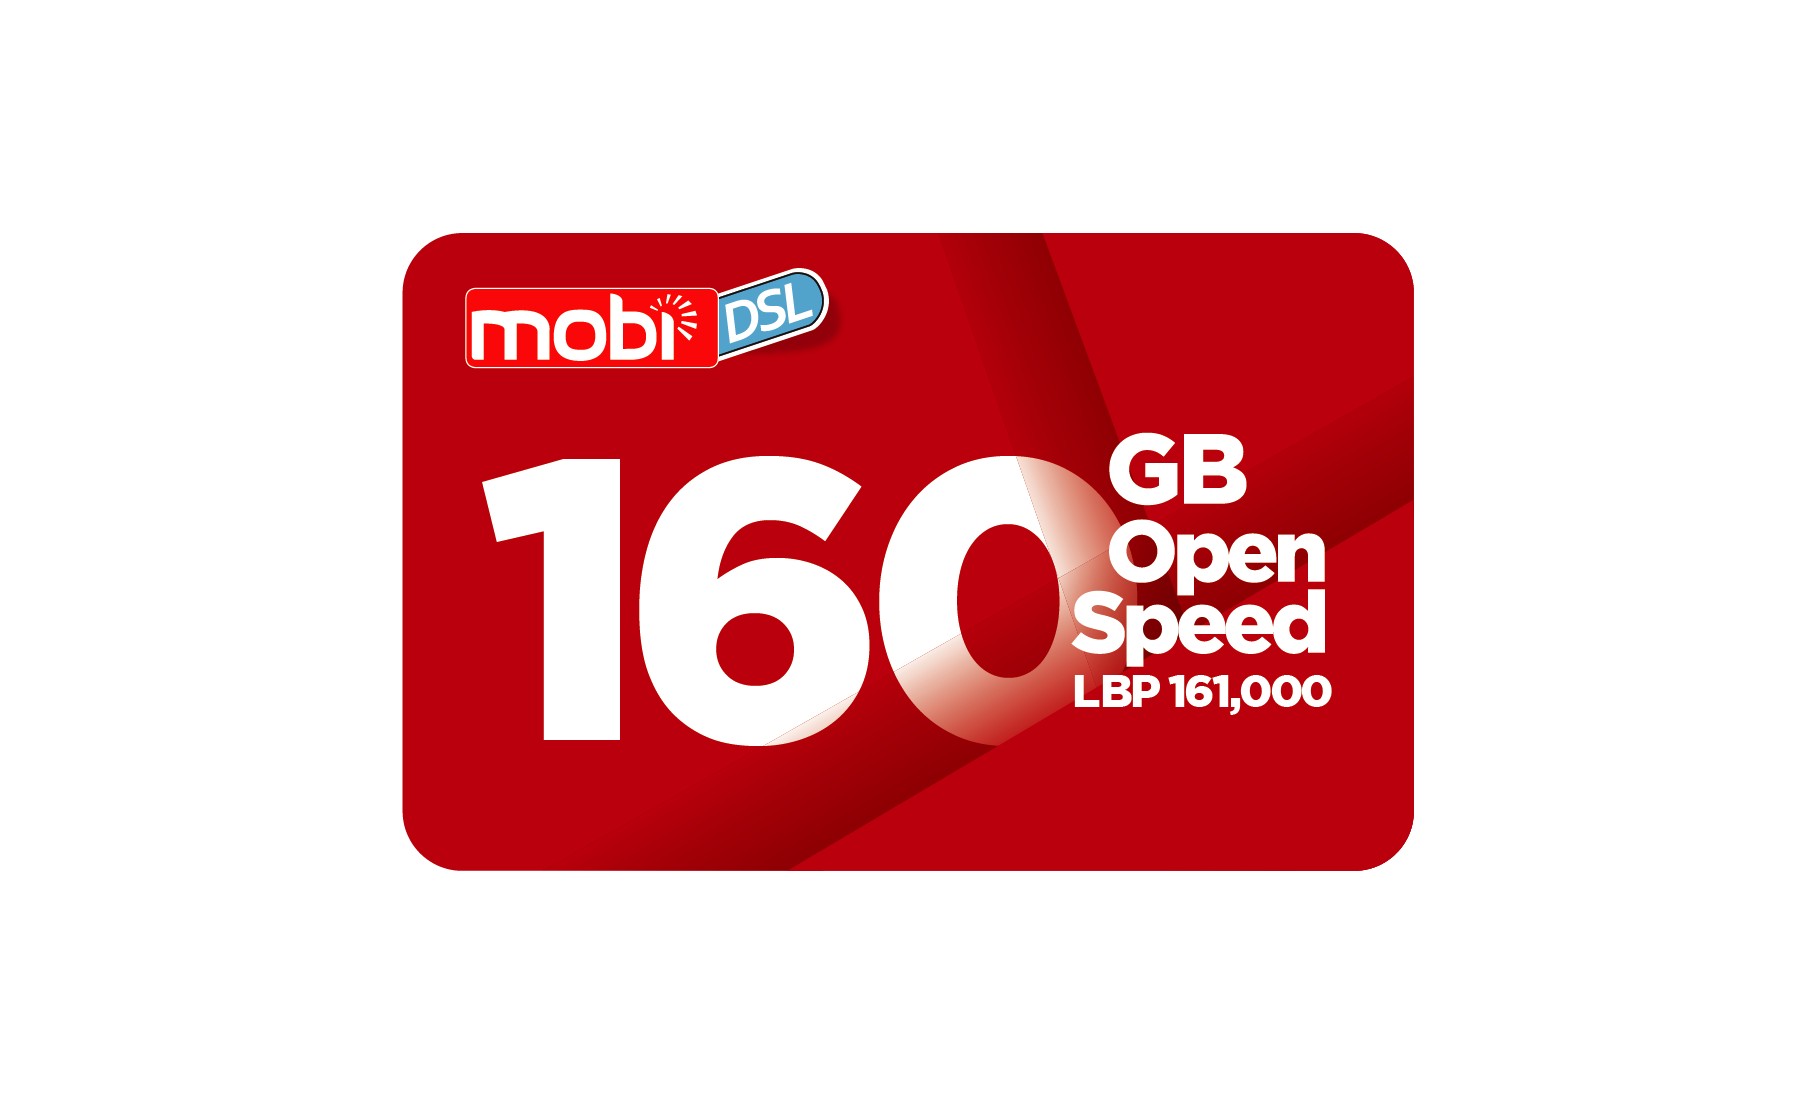 MOBI DSL O/S 160GB